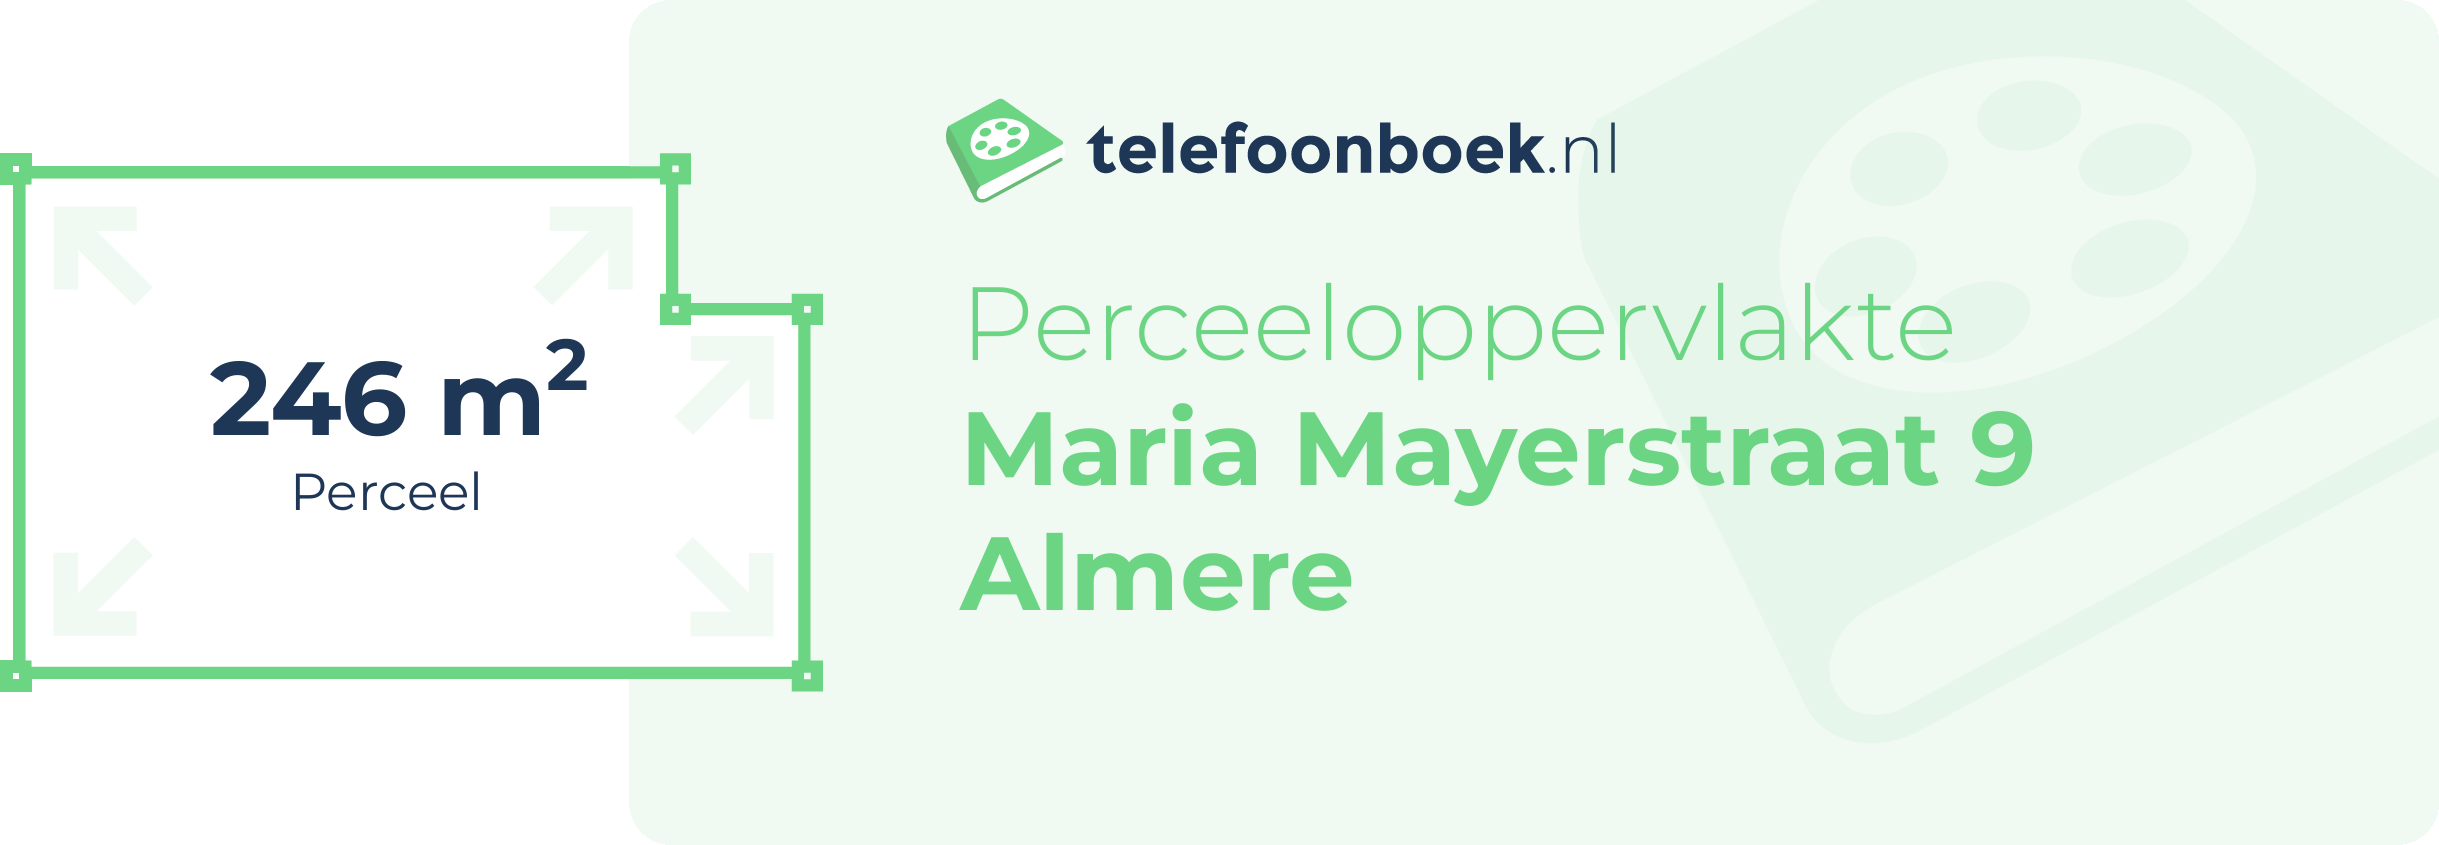 Perceeloppervlakte Maria Mayerstraat 9 Almere